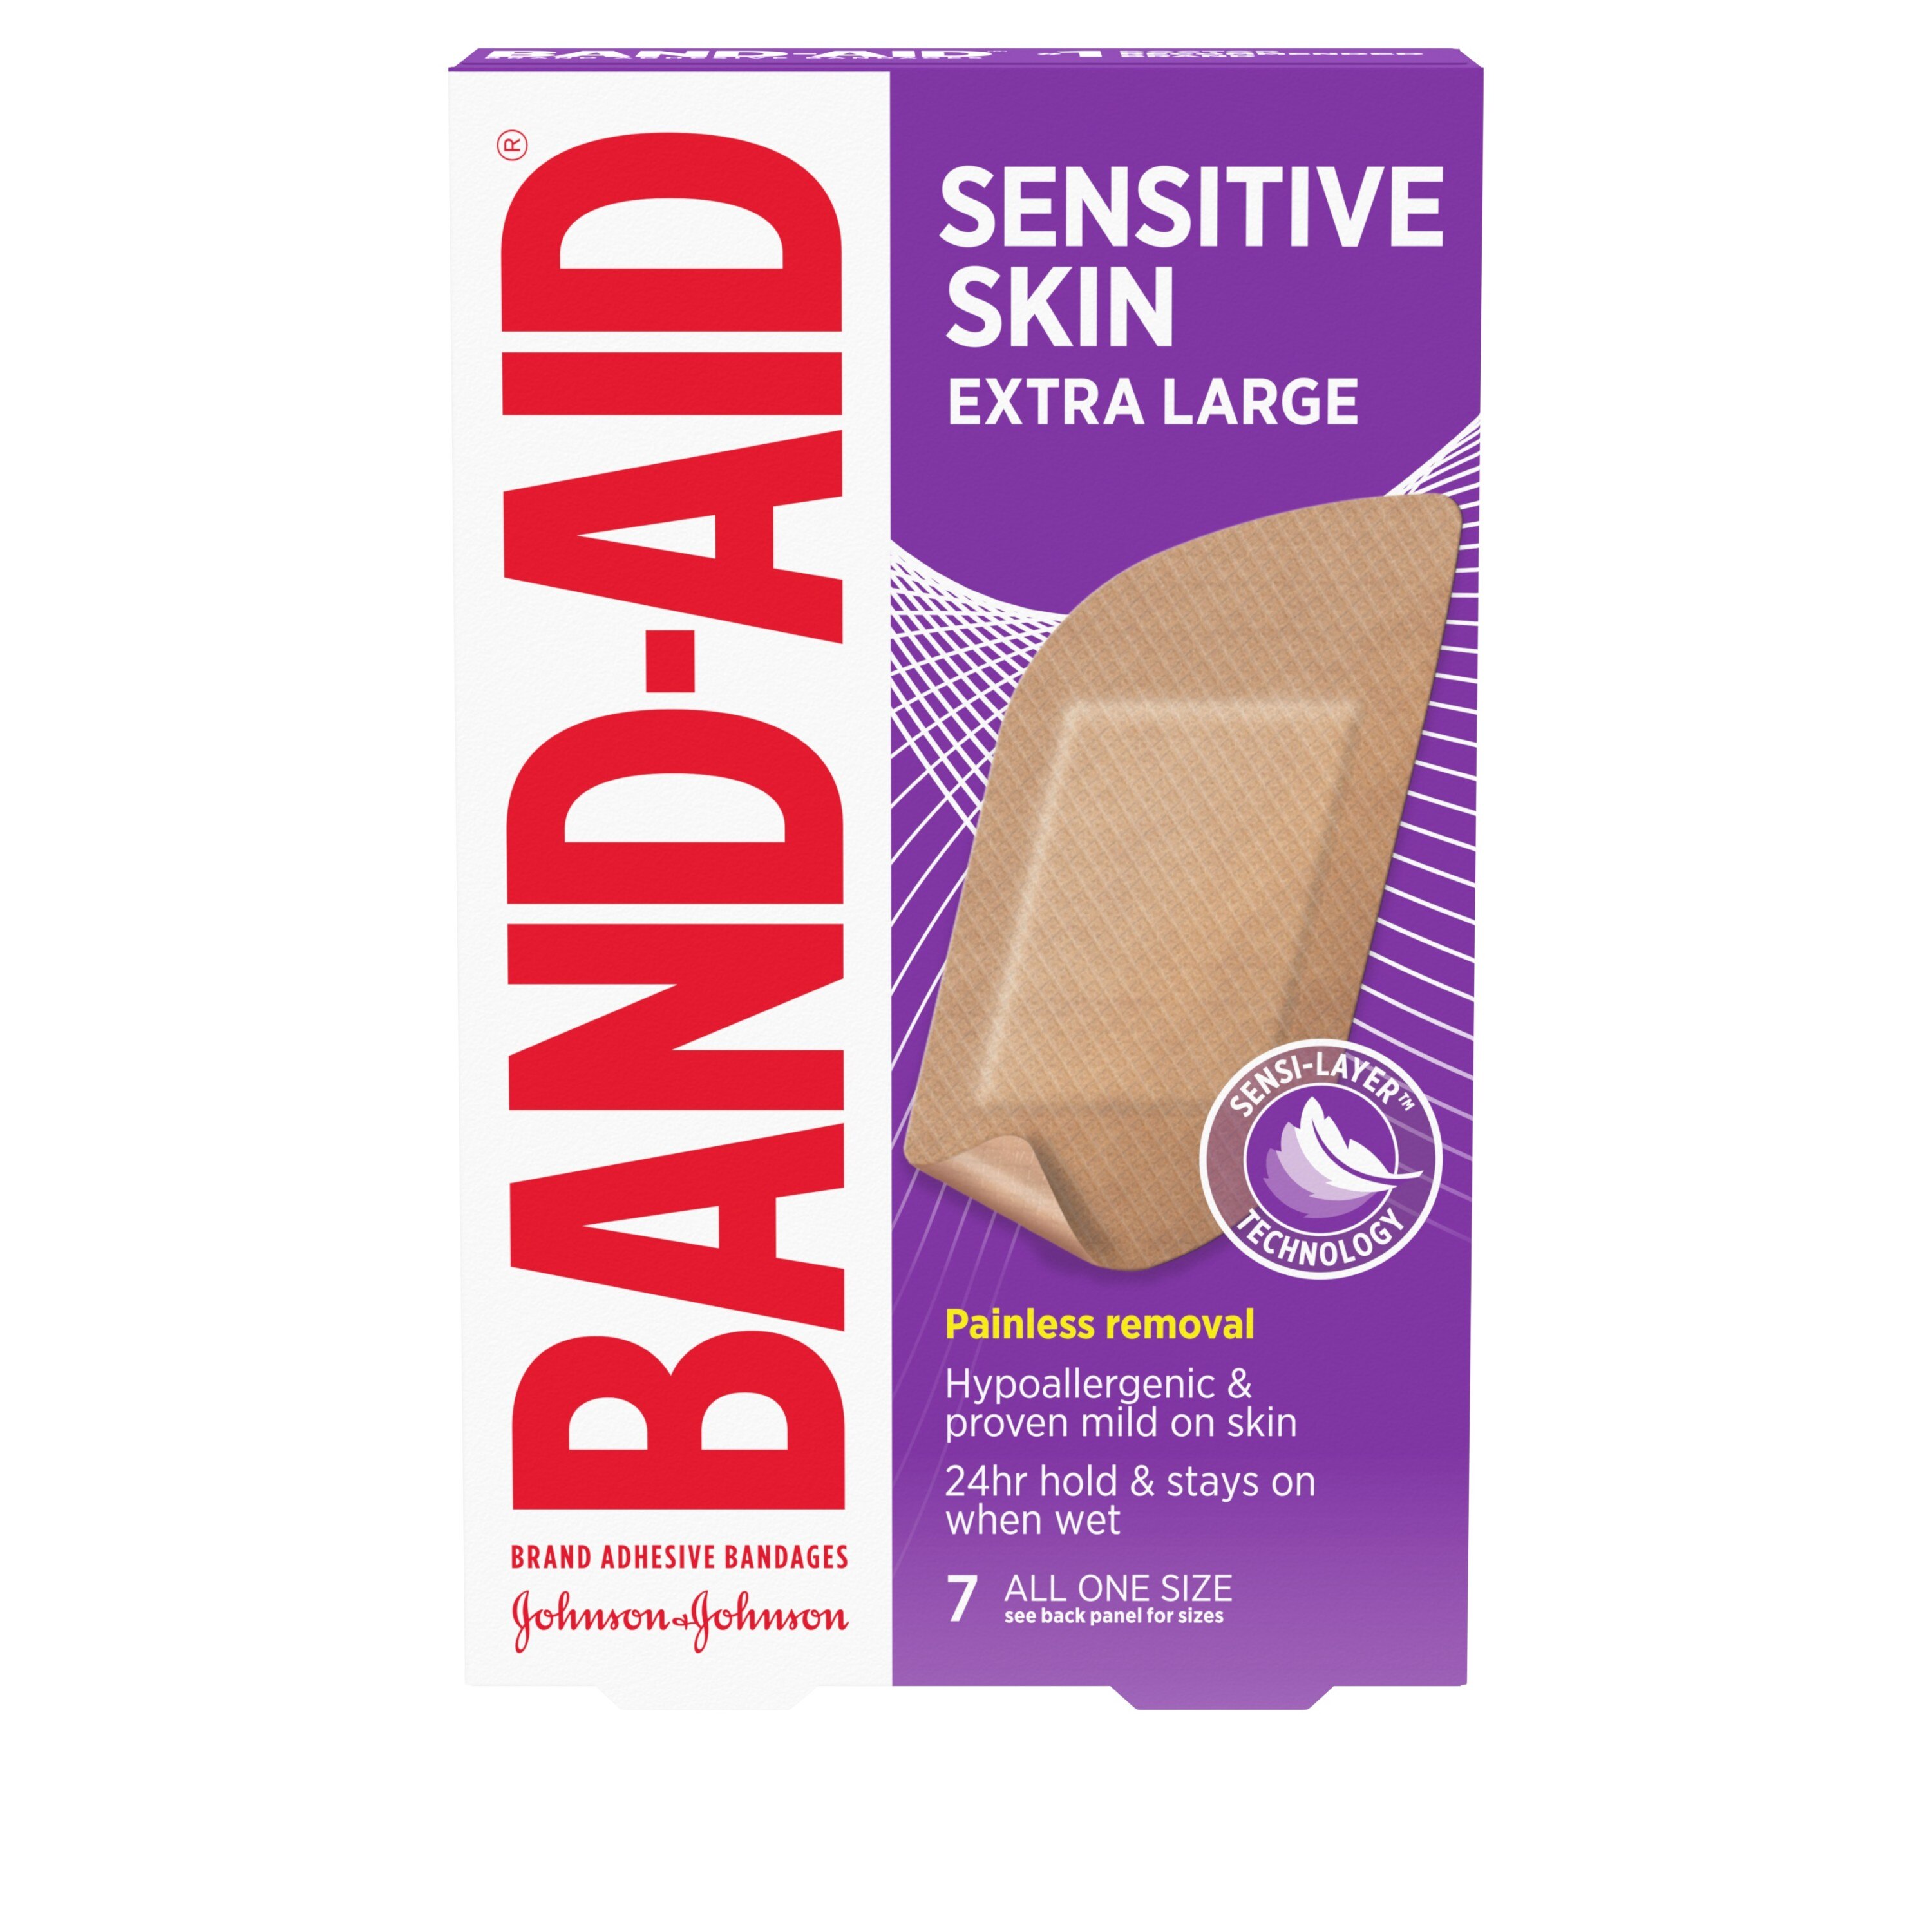 Band-Aid Brand Adhesive Bandage for Sensitive Skin, Extra Large, 7 CT